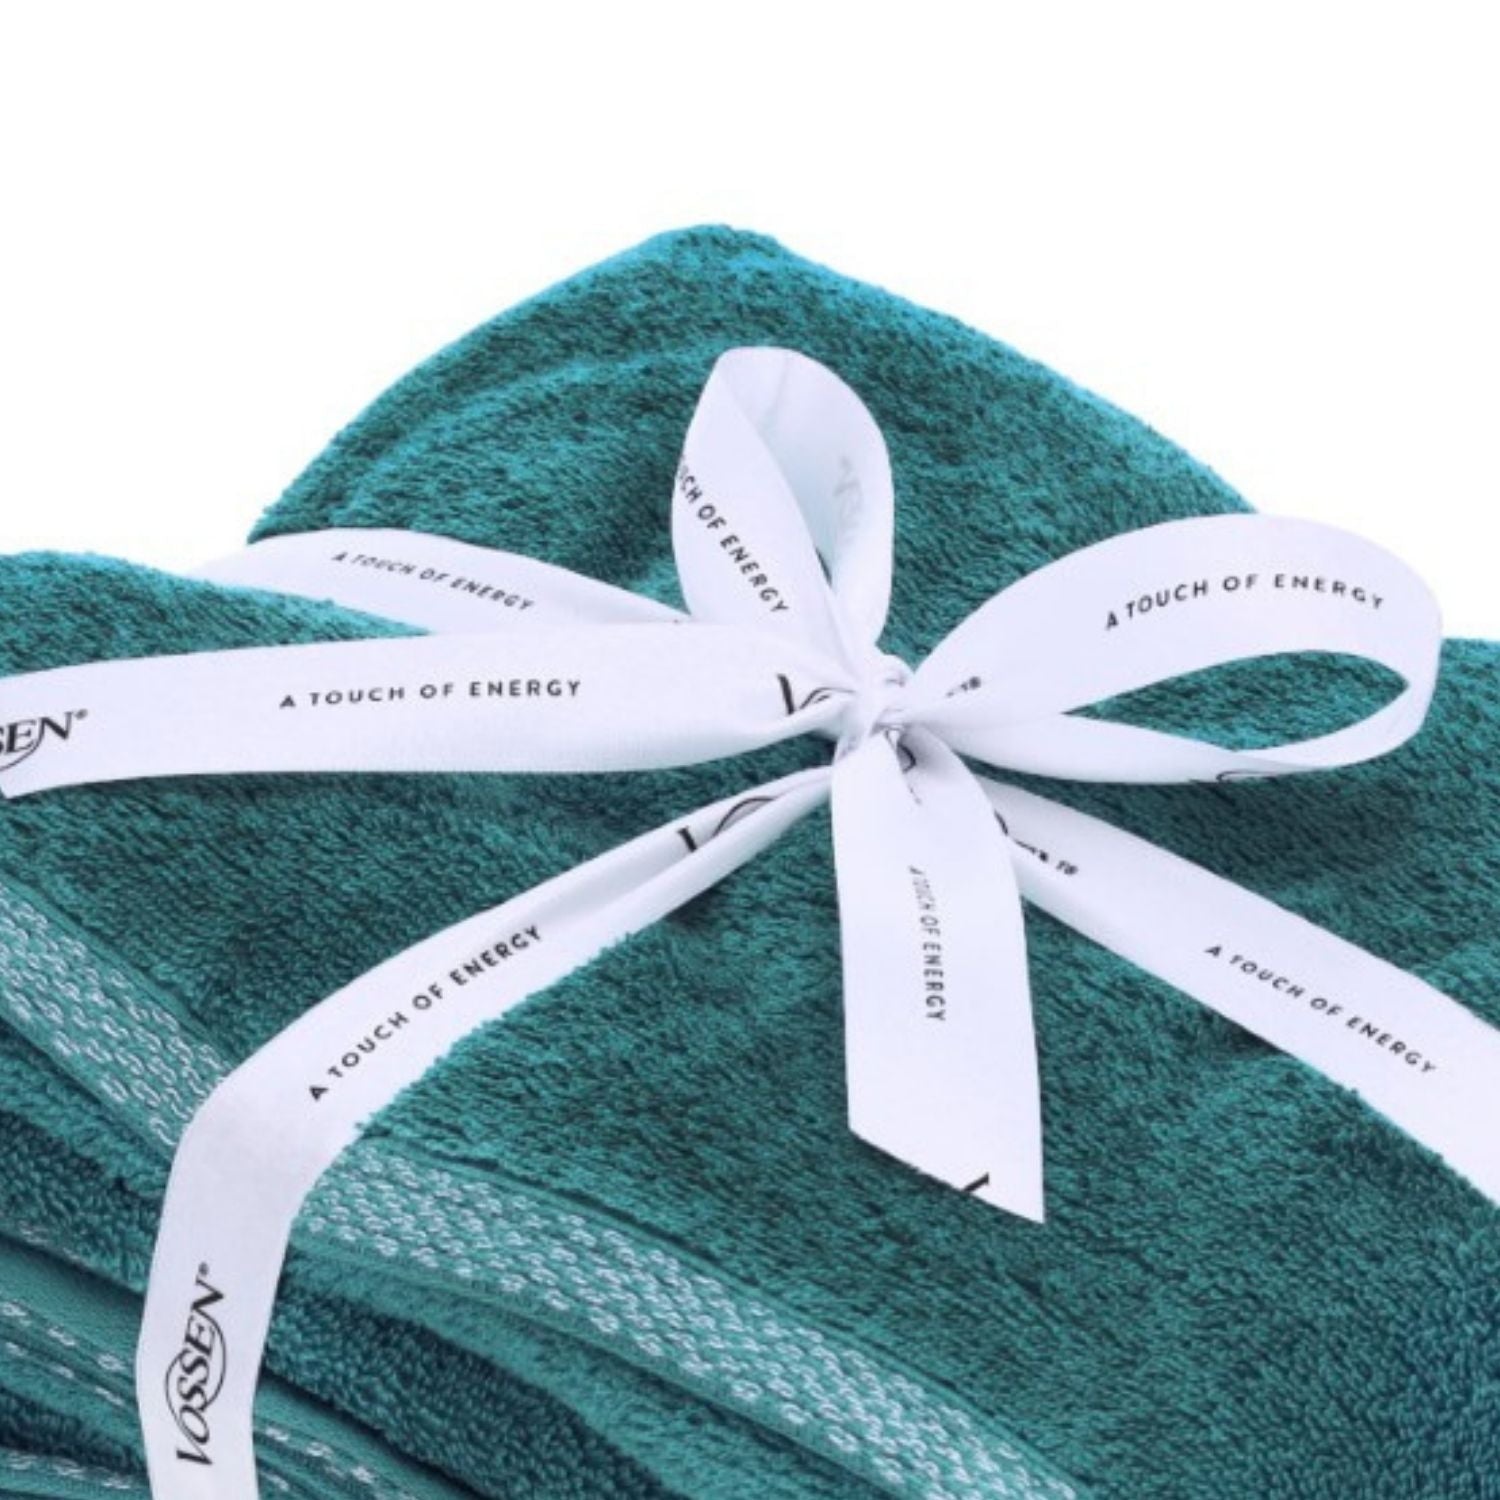 Vossen Clash Guest Towel - Set Of 3 1 Shaws Department Stores